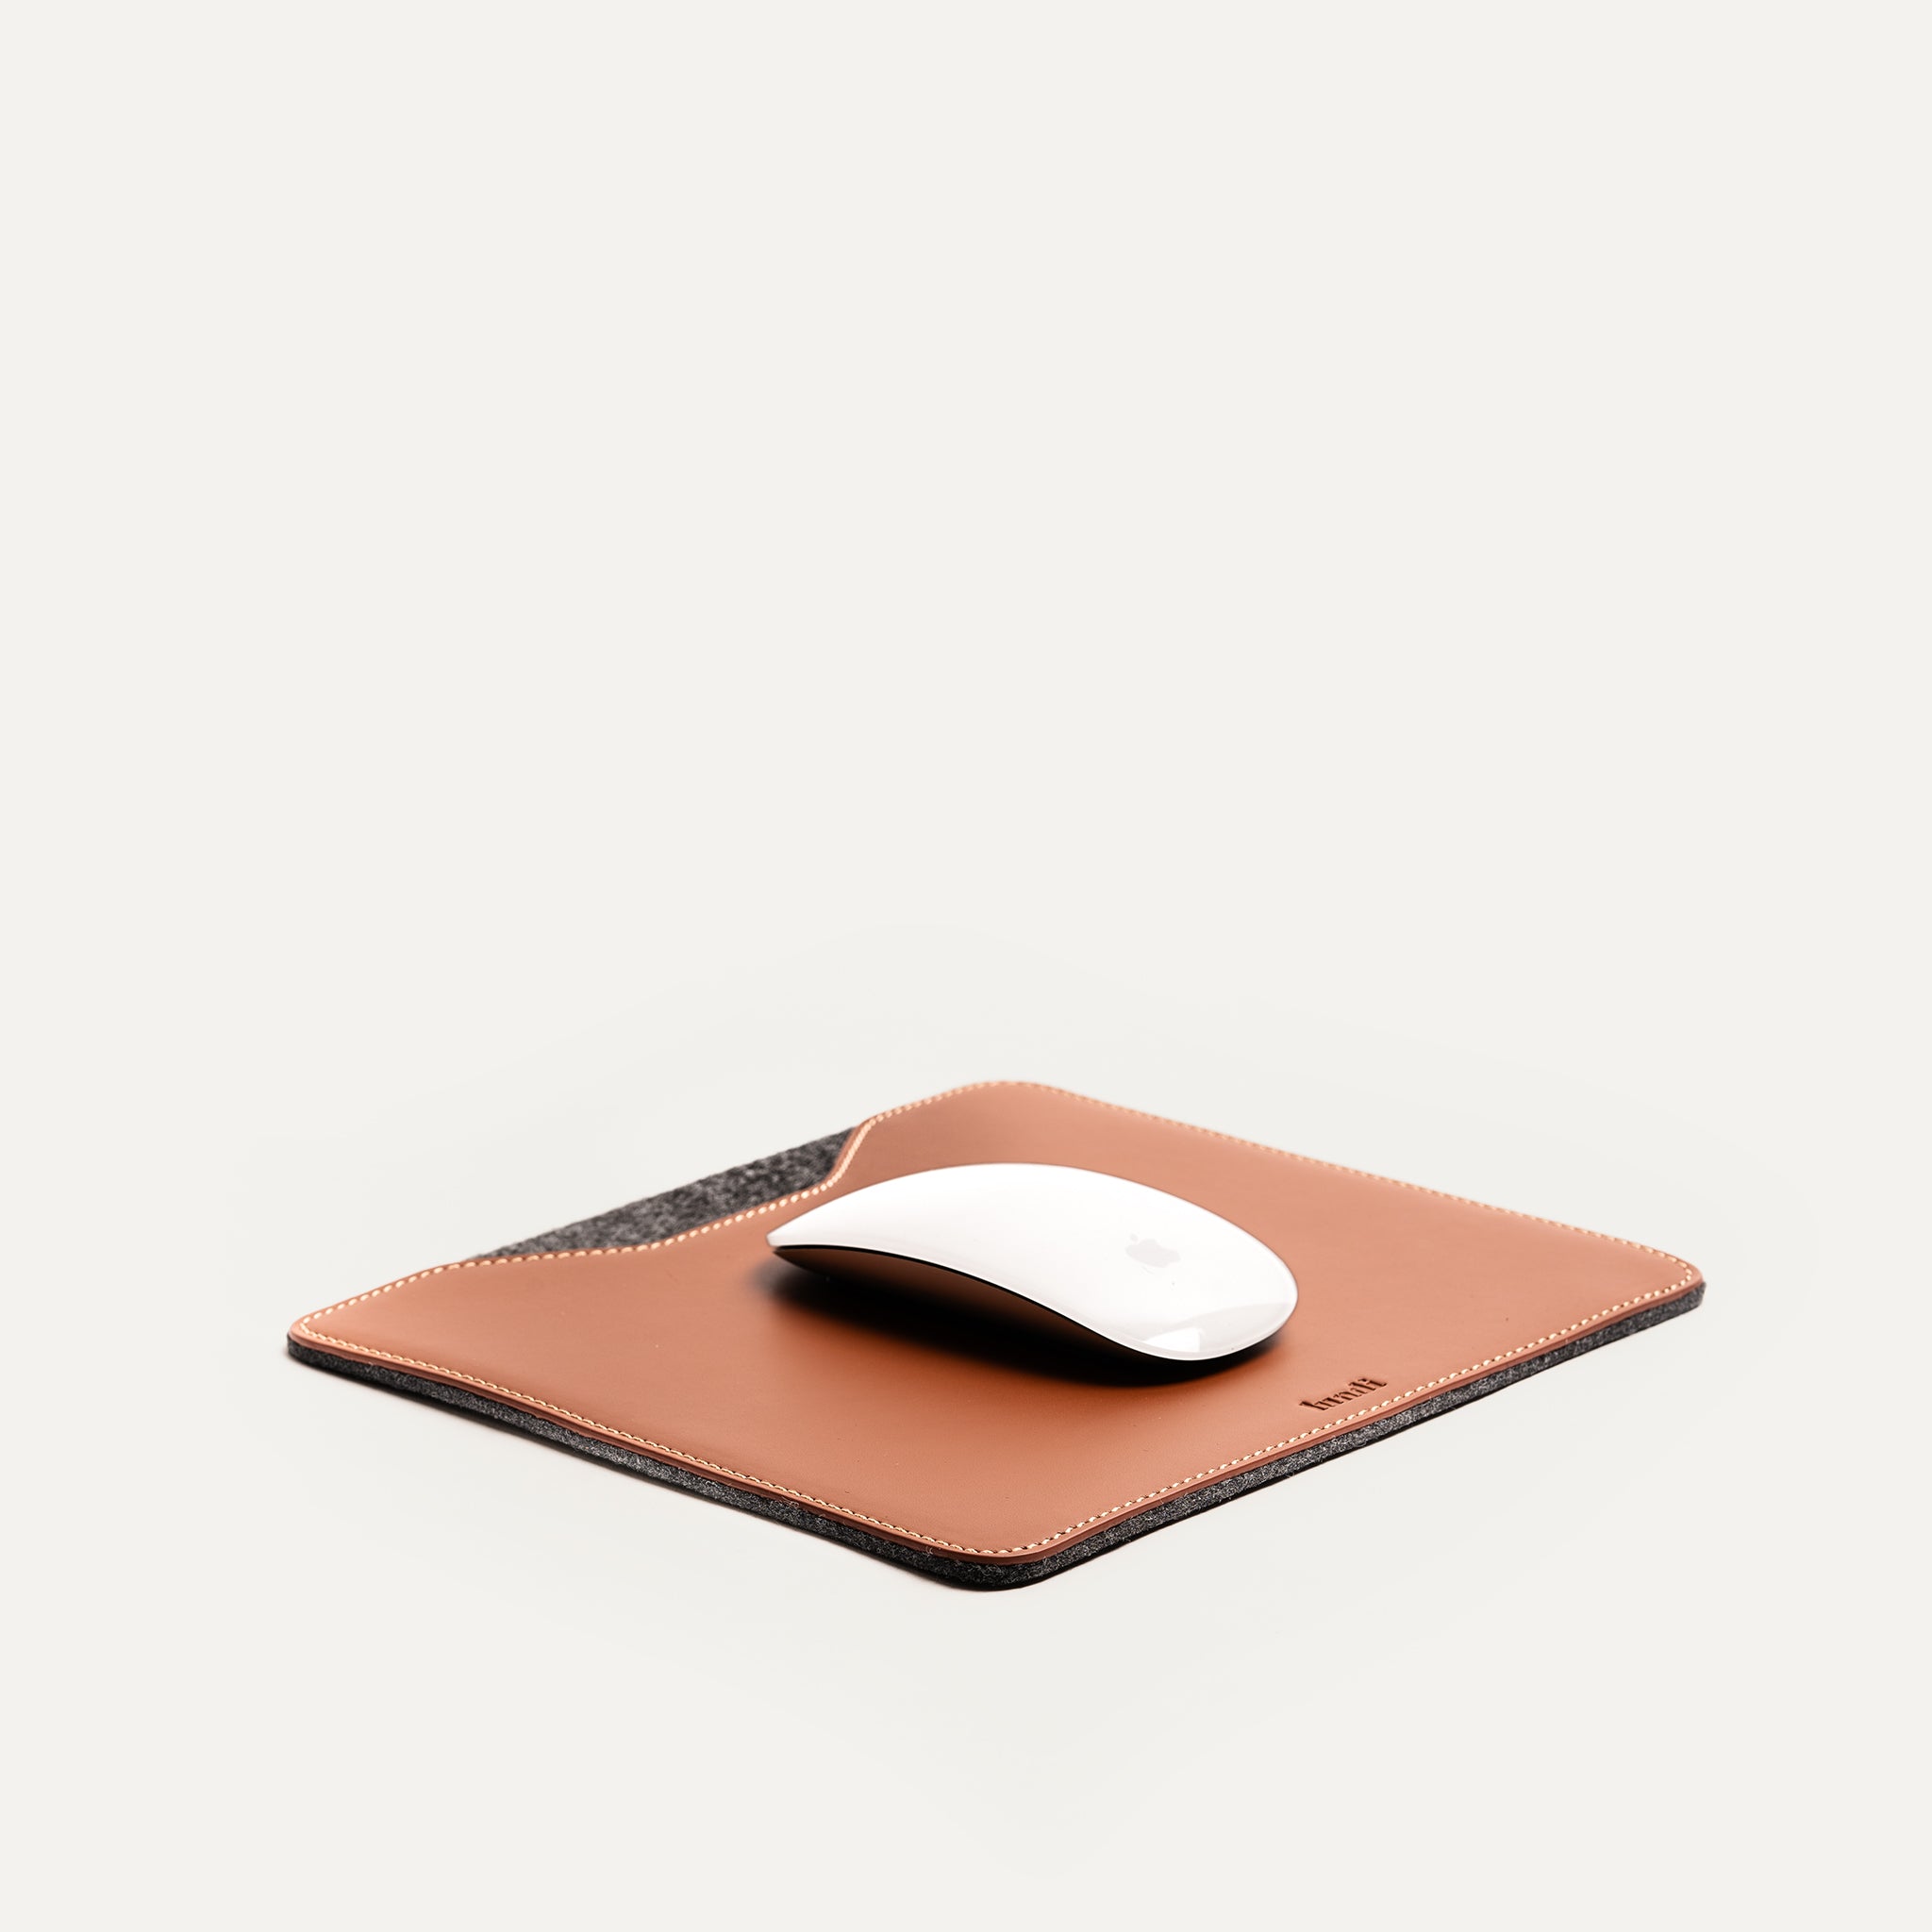 Leather Mouse Pad | Nino Cognac